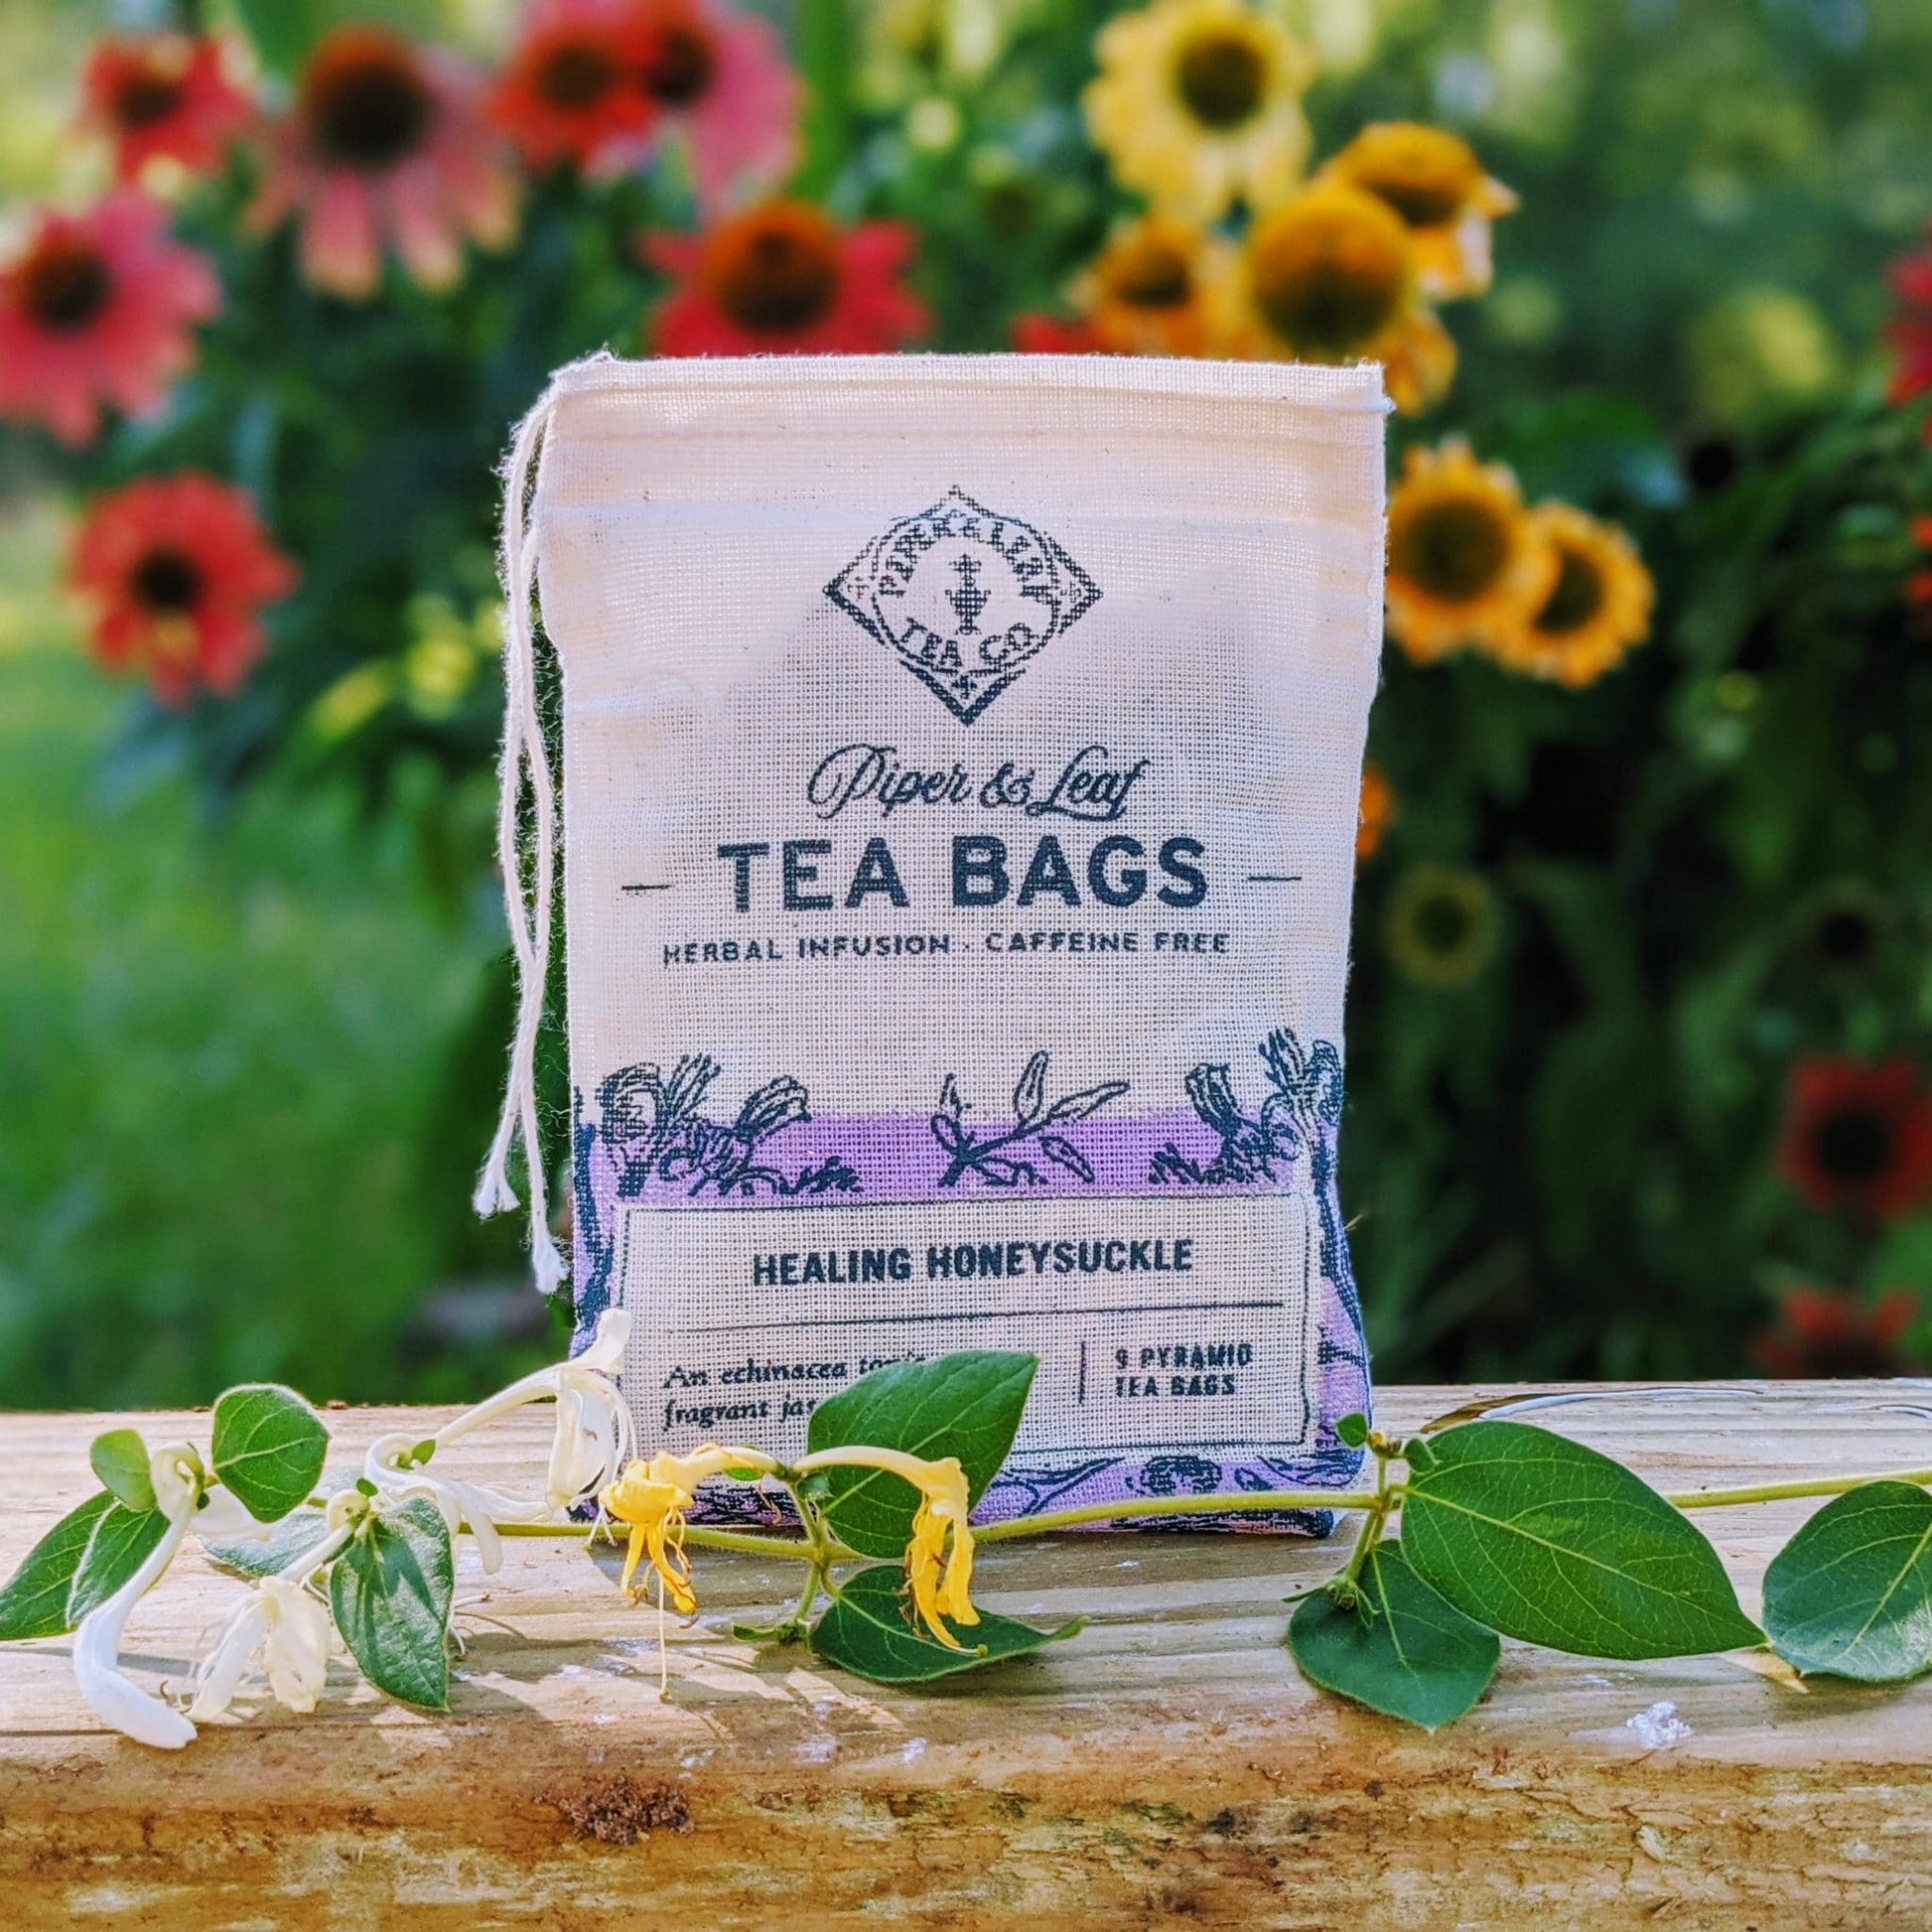 Healing Honeysuckle muslin of Tea Bags